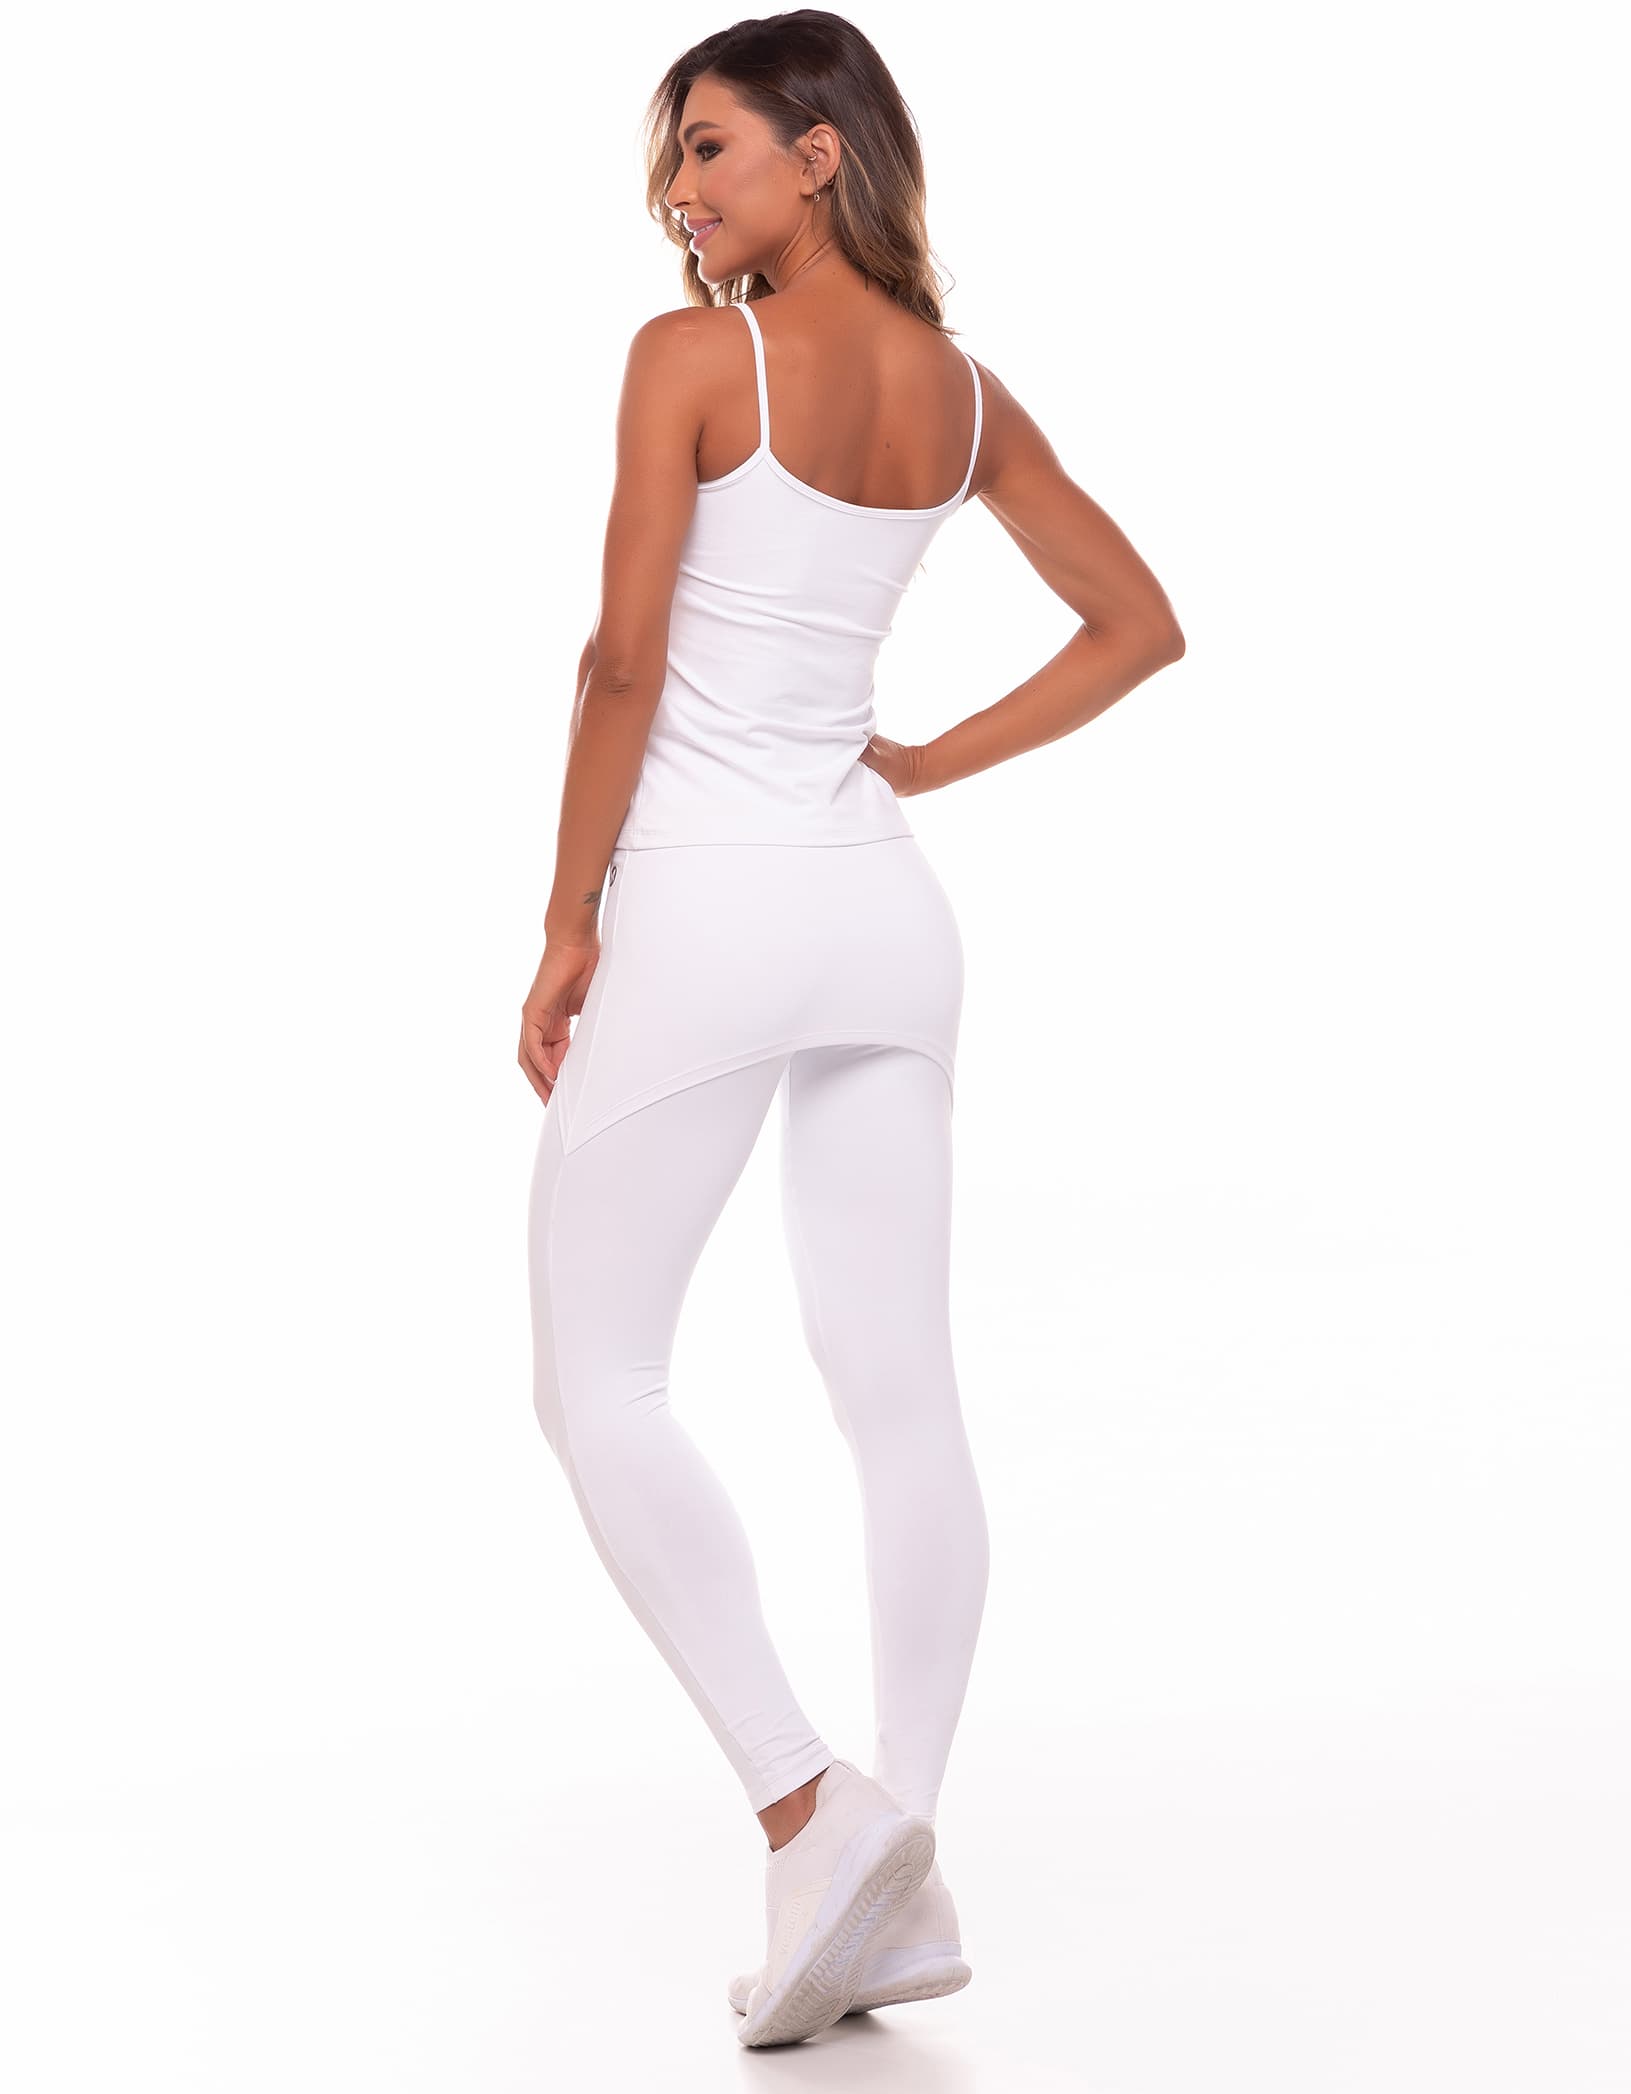 Vestem - Thin Strap Tank Shirt White Bulge Top - REG53.C0001